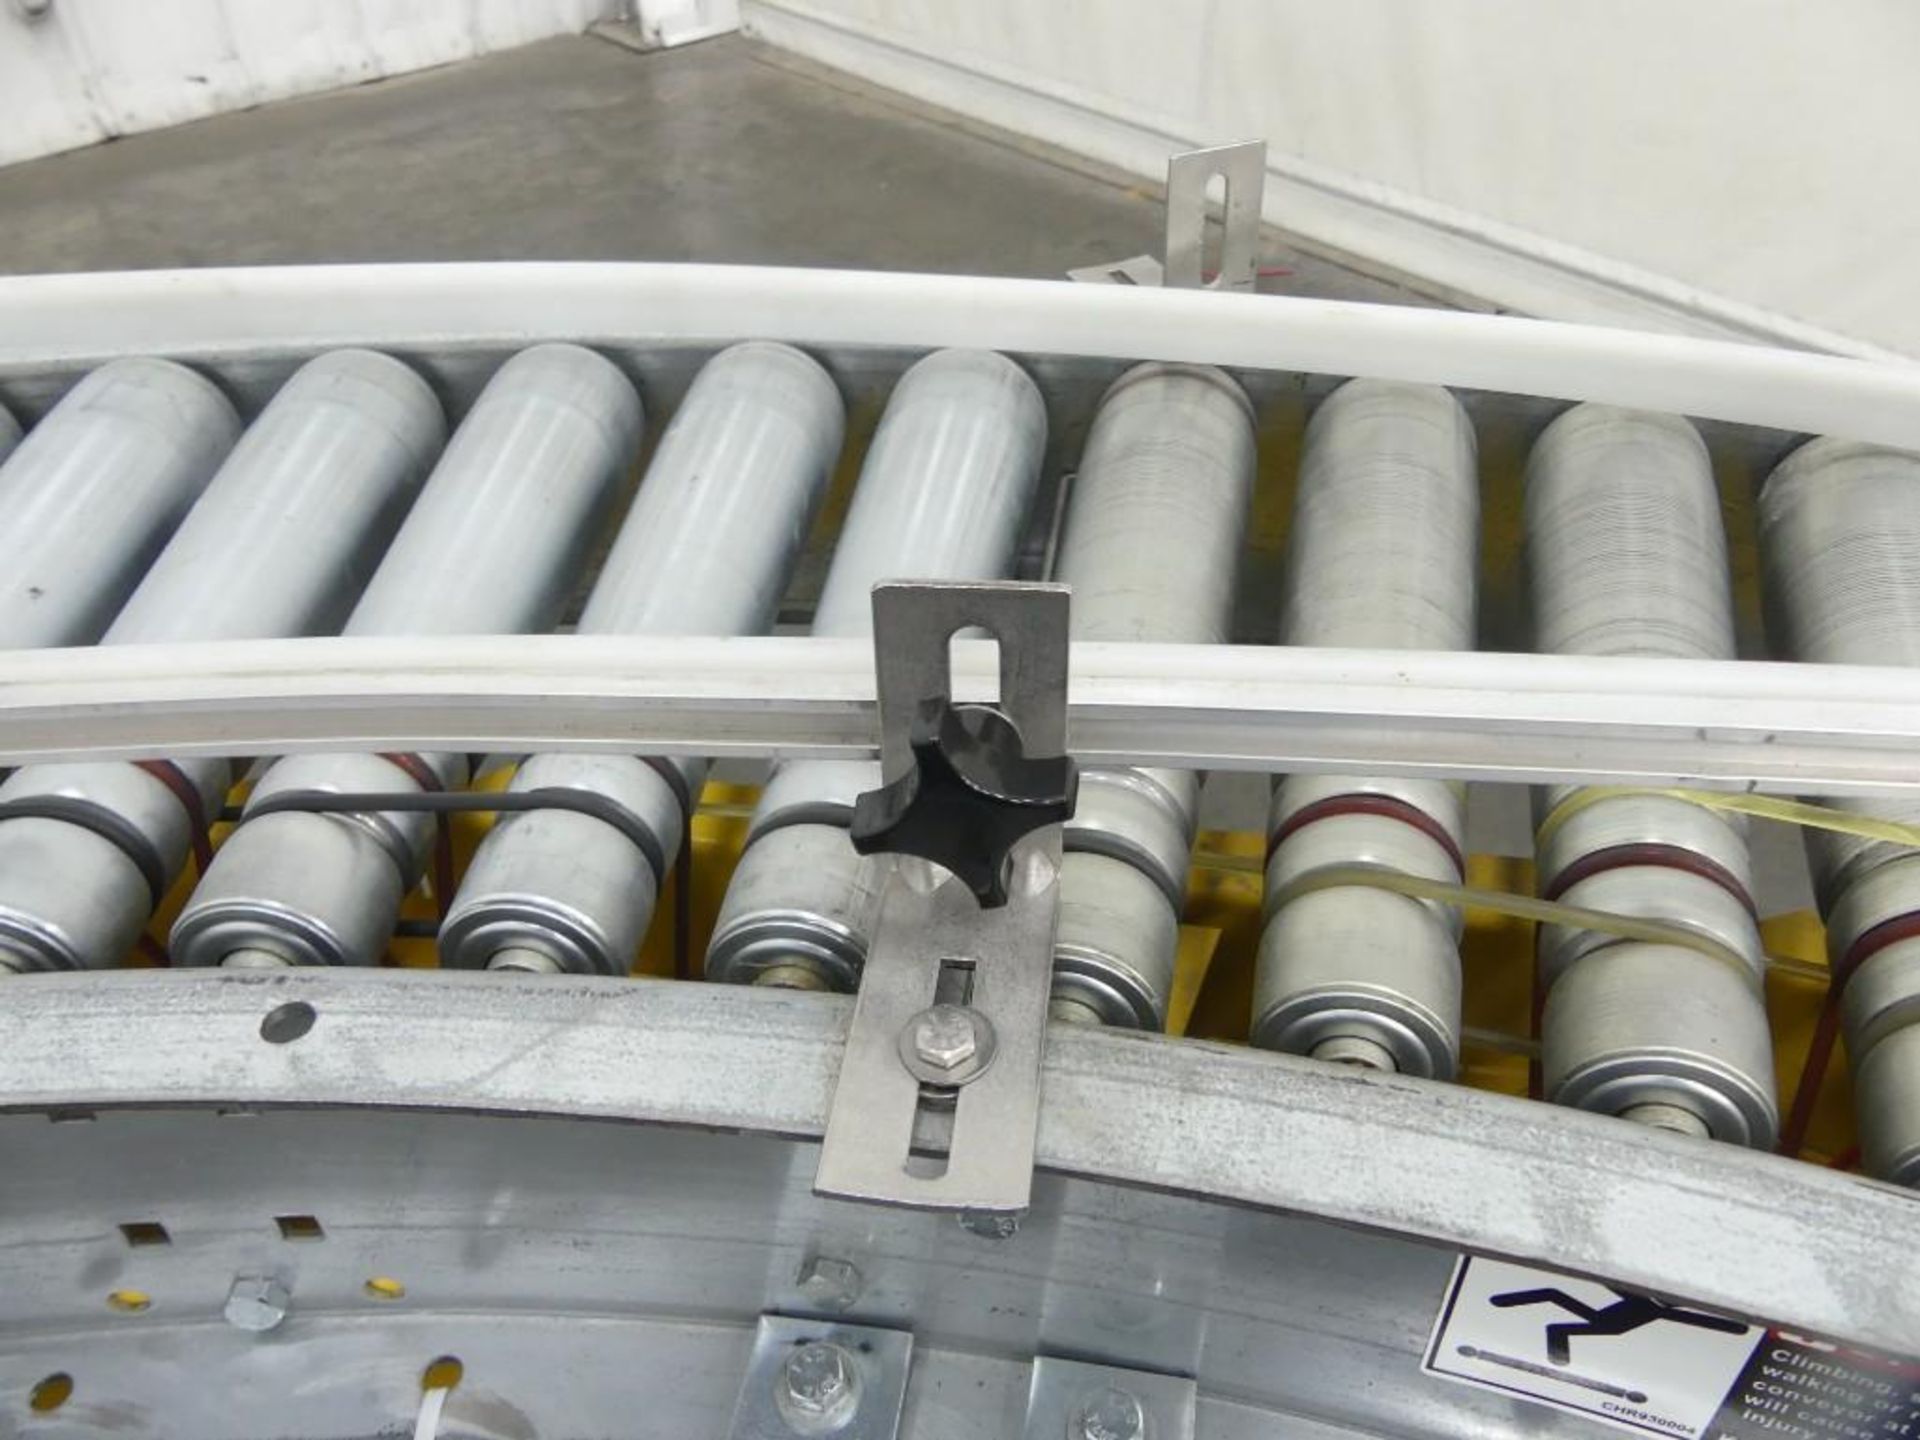 Hytrol Lineshaft Roller Conveyor 15' L x 9.5 W - Image 8 of 8